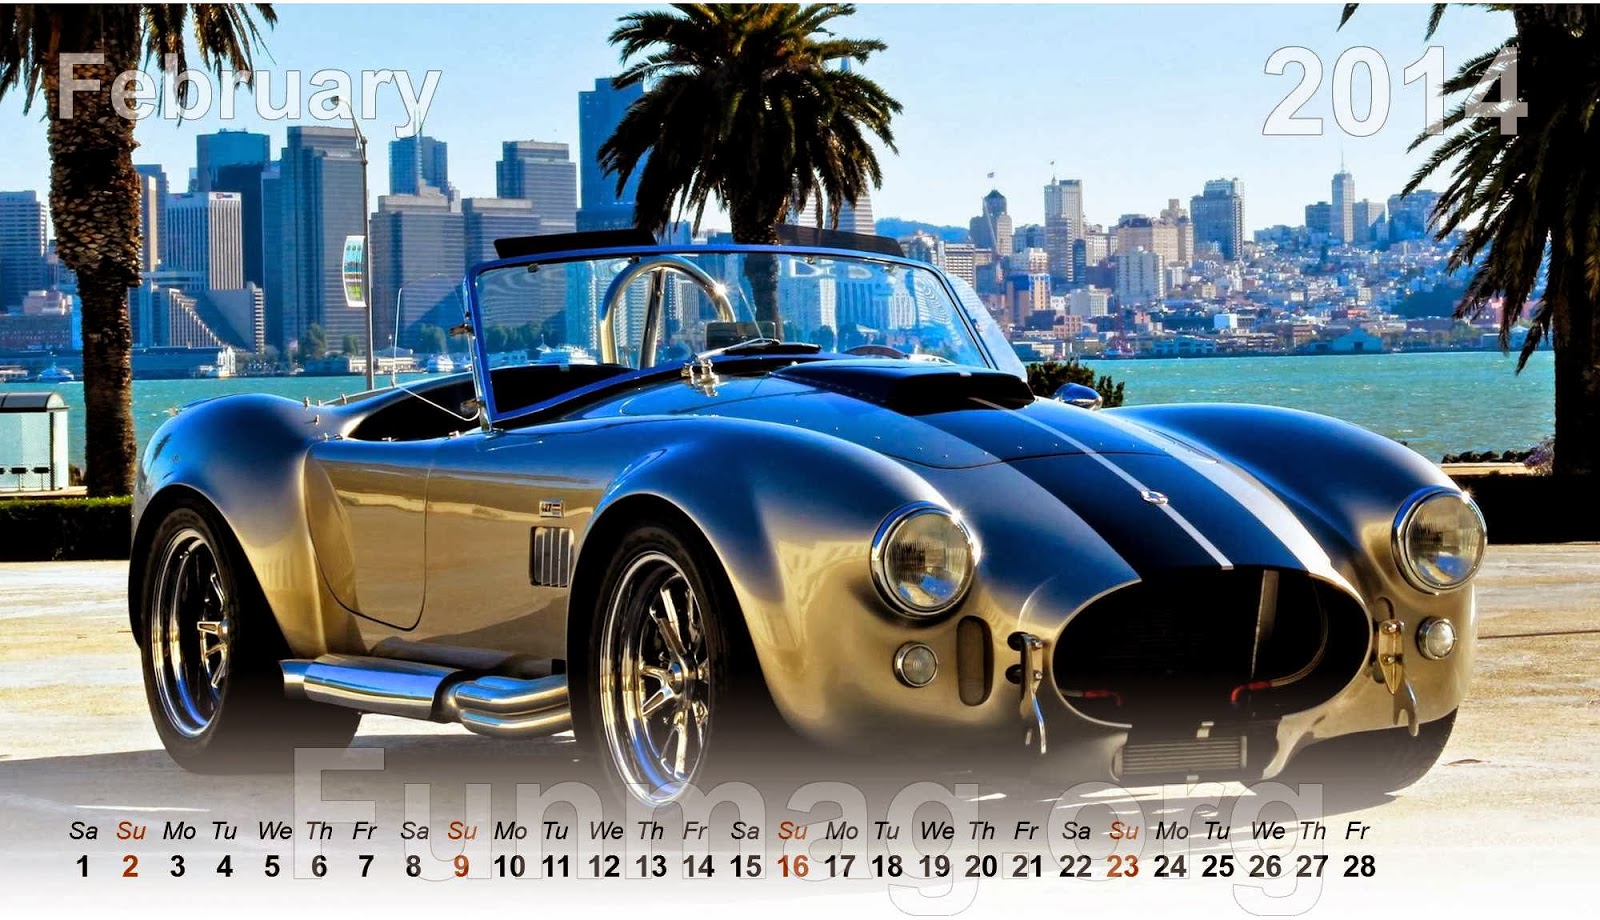 http://www.funmag.org/pictures-mag/calendar/cars-calendar-2014/